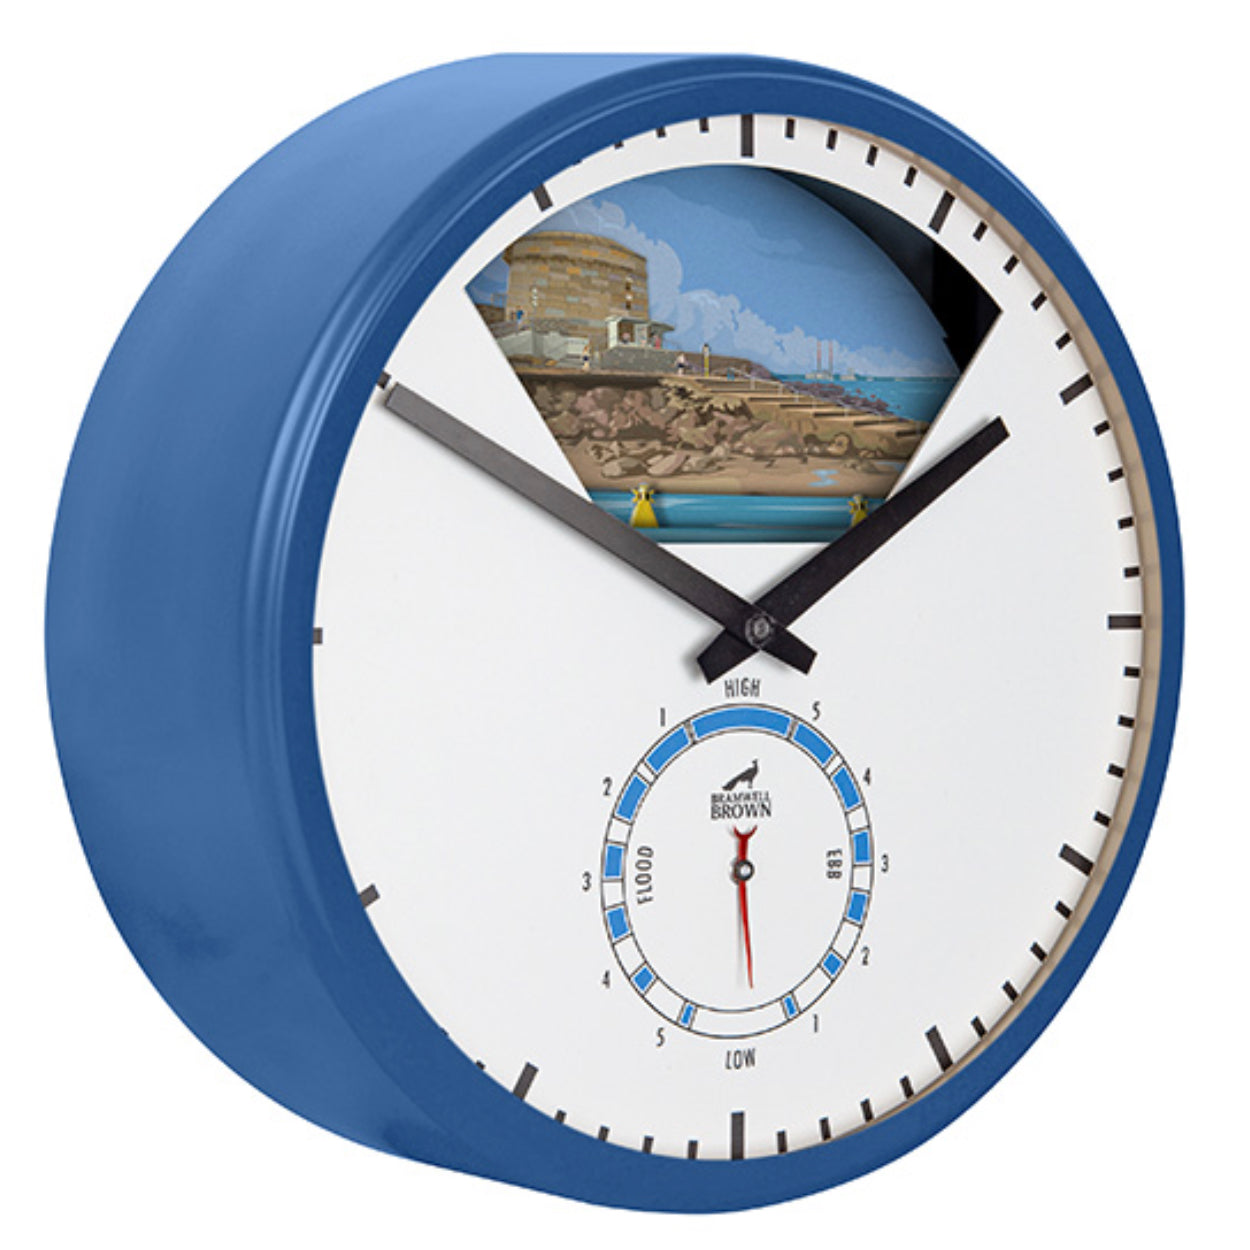 Seapoint tide clock